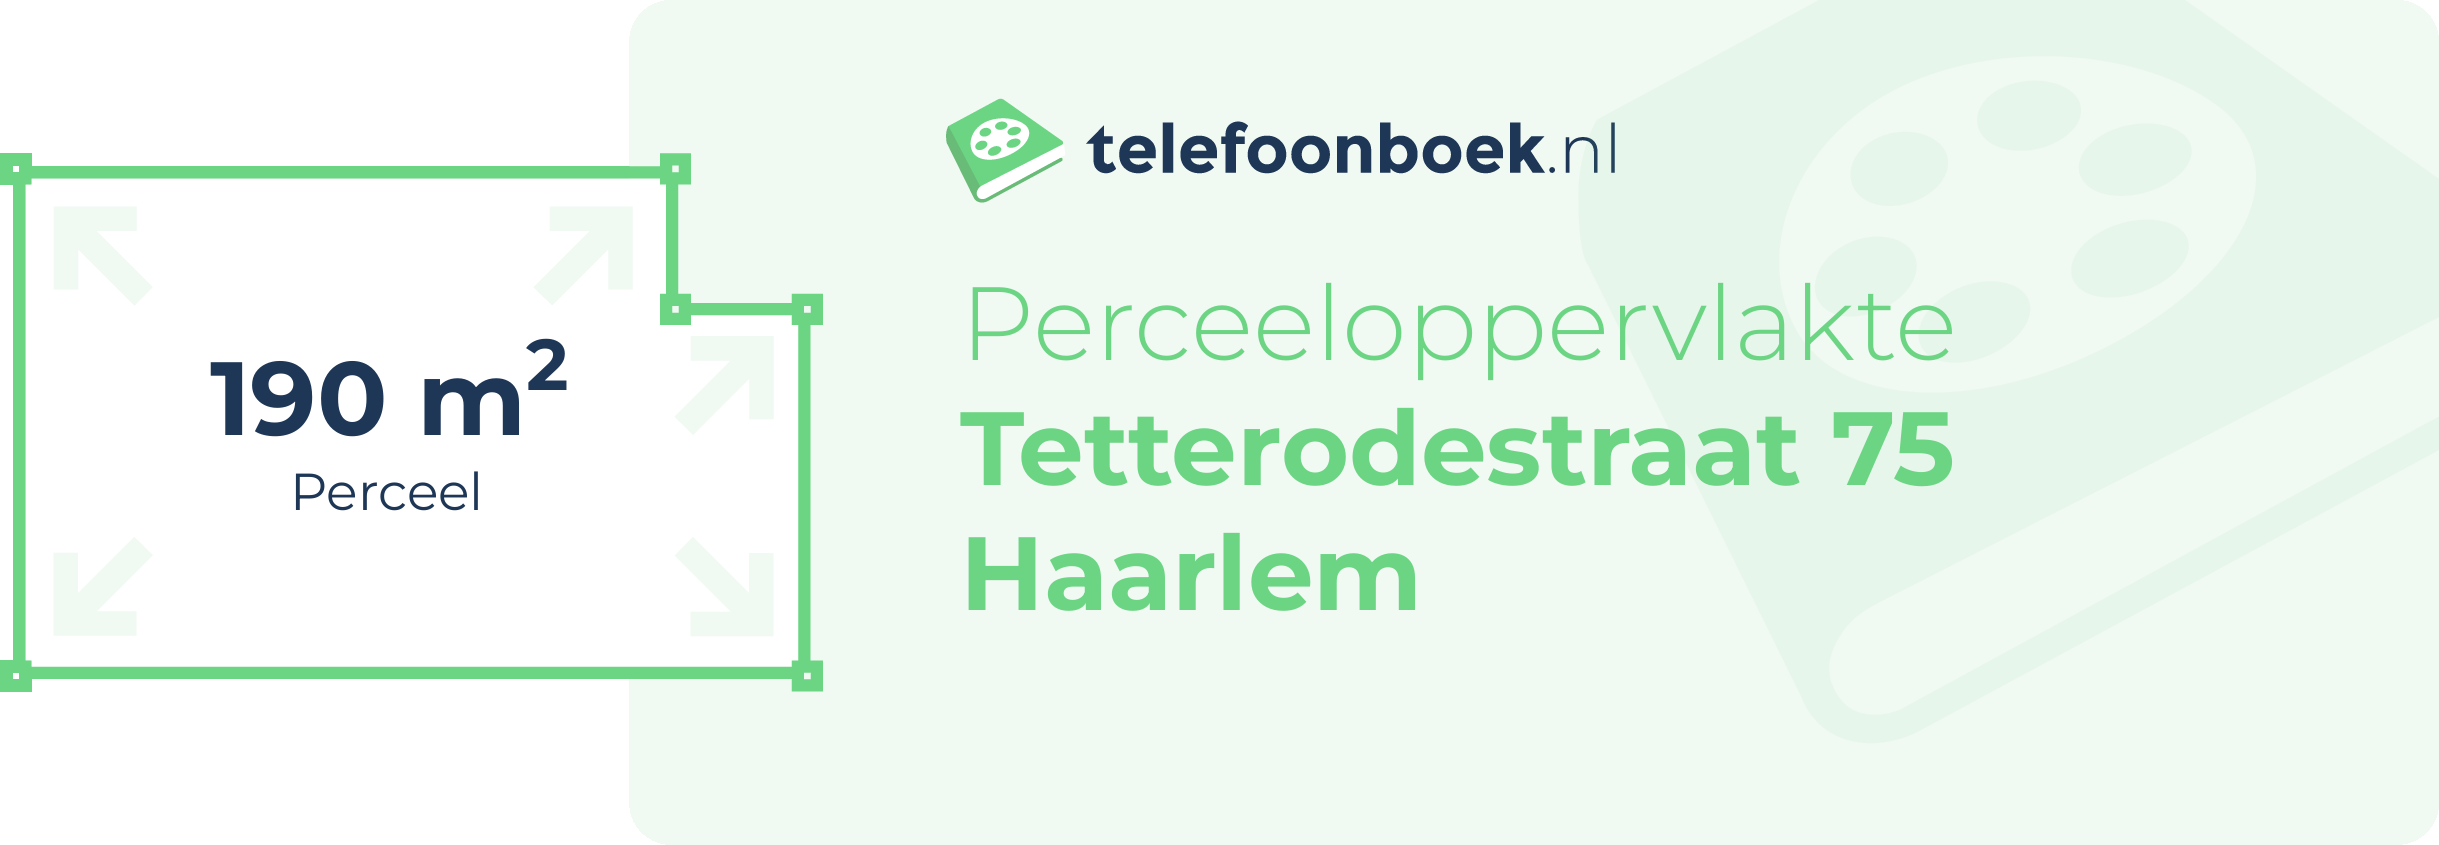 Perceeloppervlakte Tetterodestraat 75 Haarlem